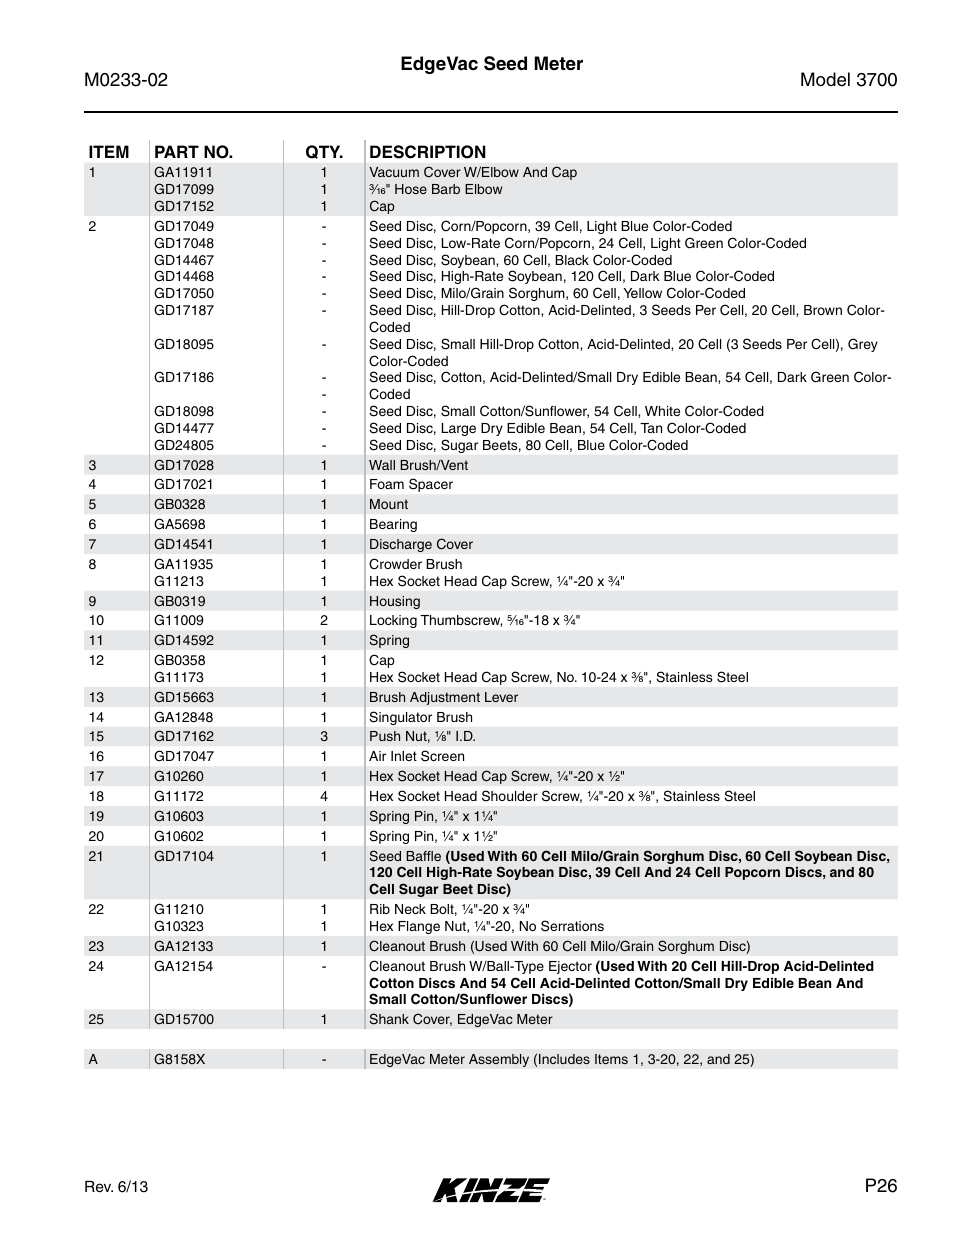 Kinze 3700 Front Folding Planter Rev. 6/14 User Manual | Page 29 / 284